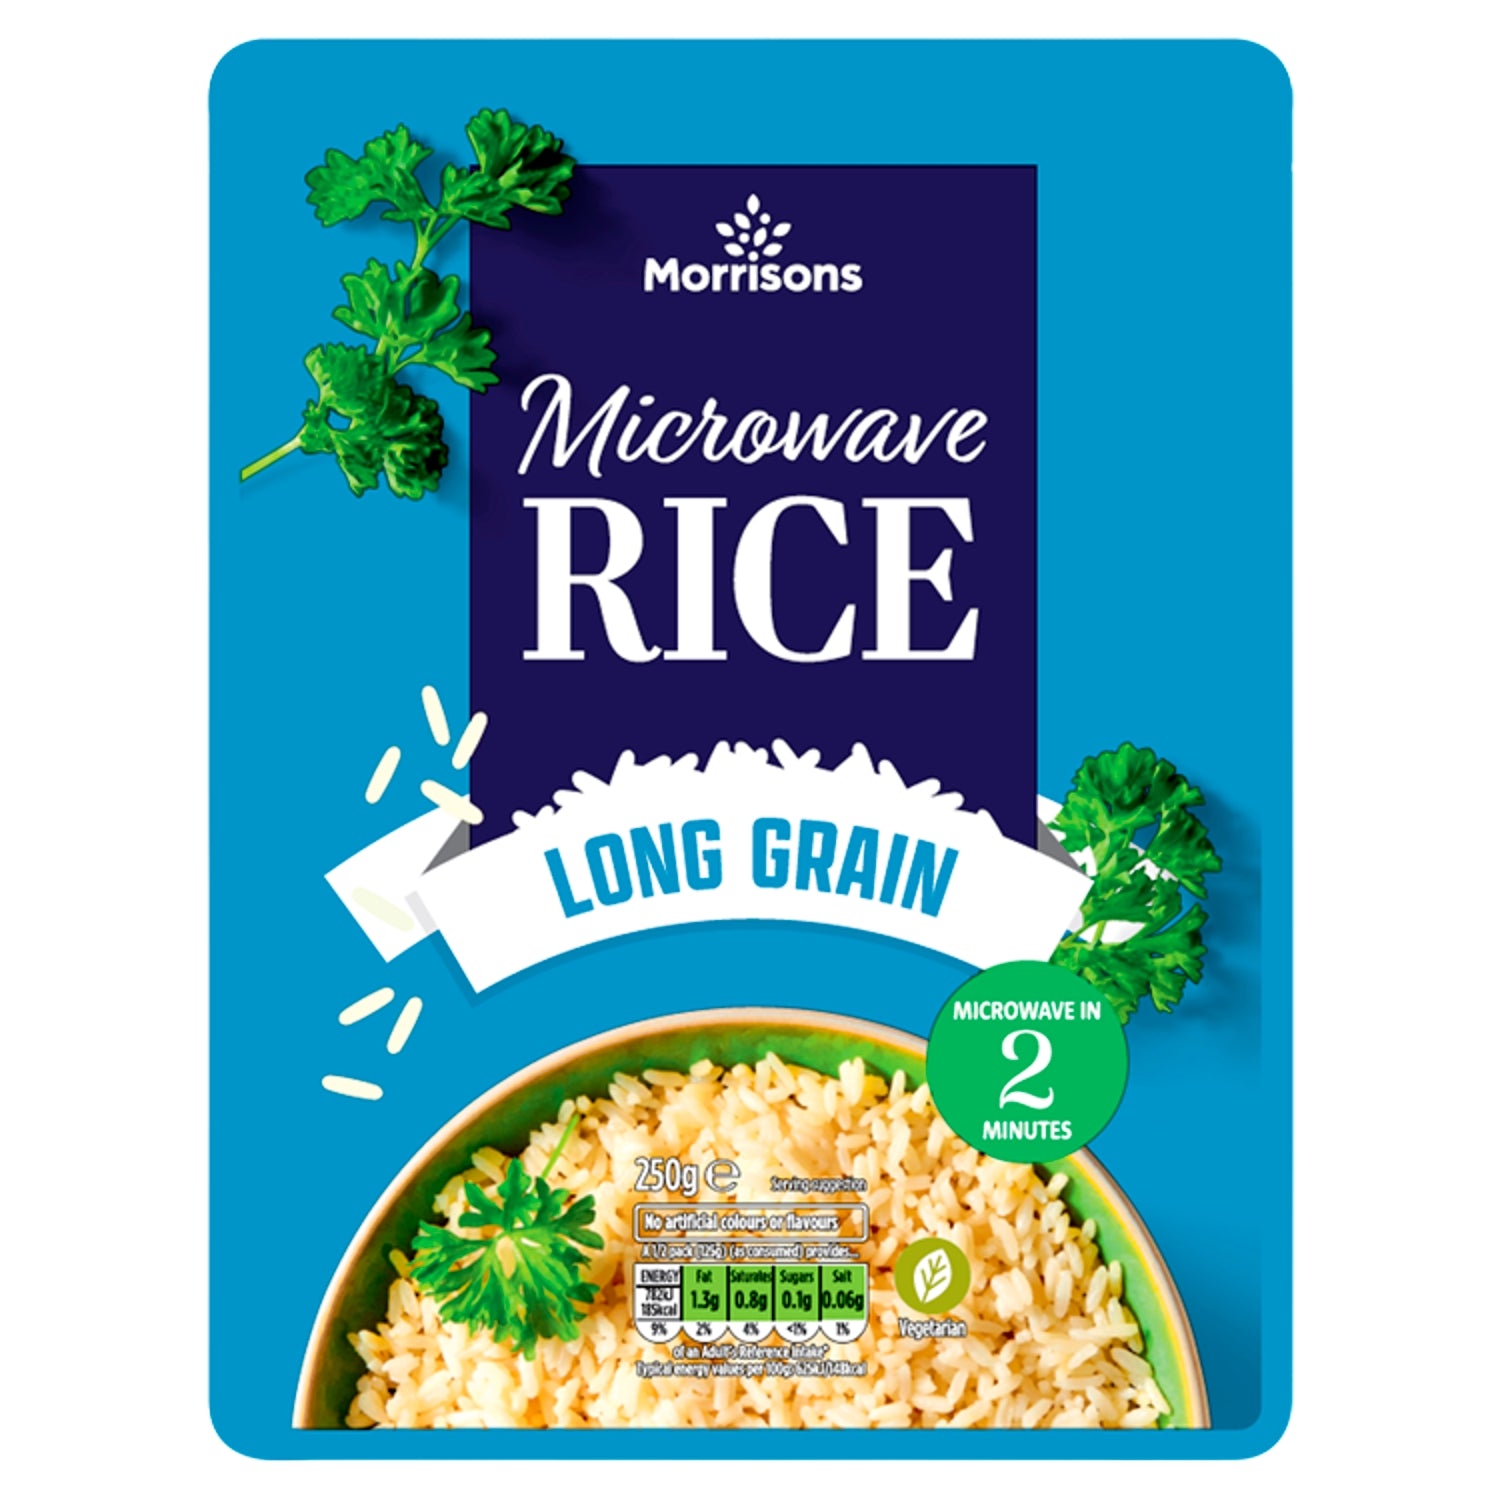 Morrisons Long Grain Microwave Rice 250g